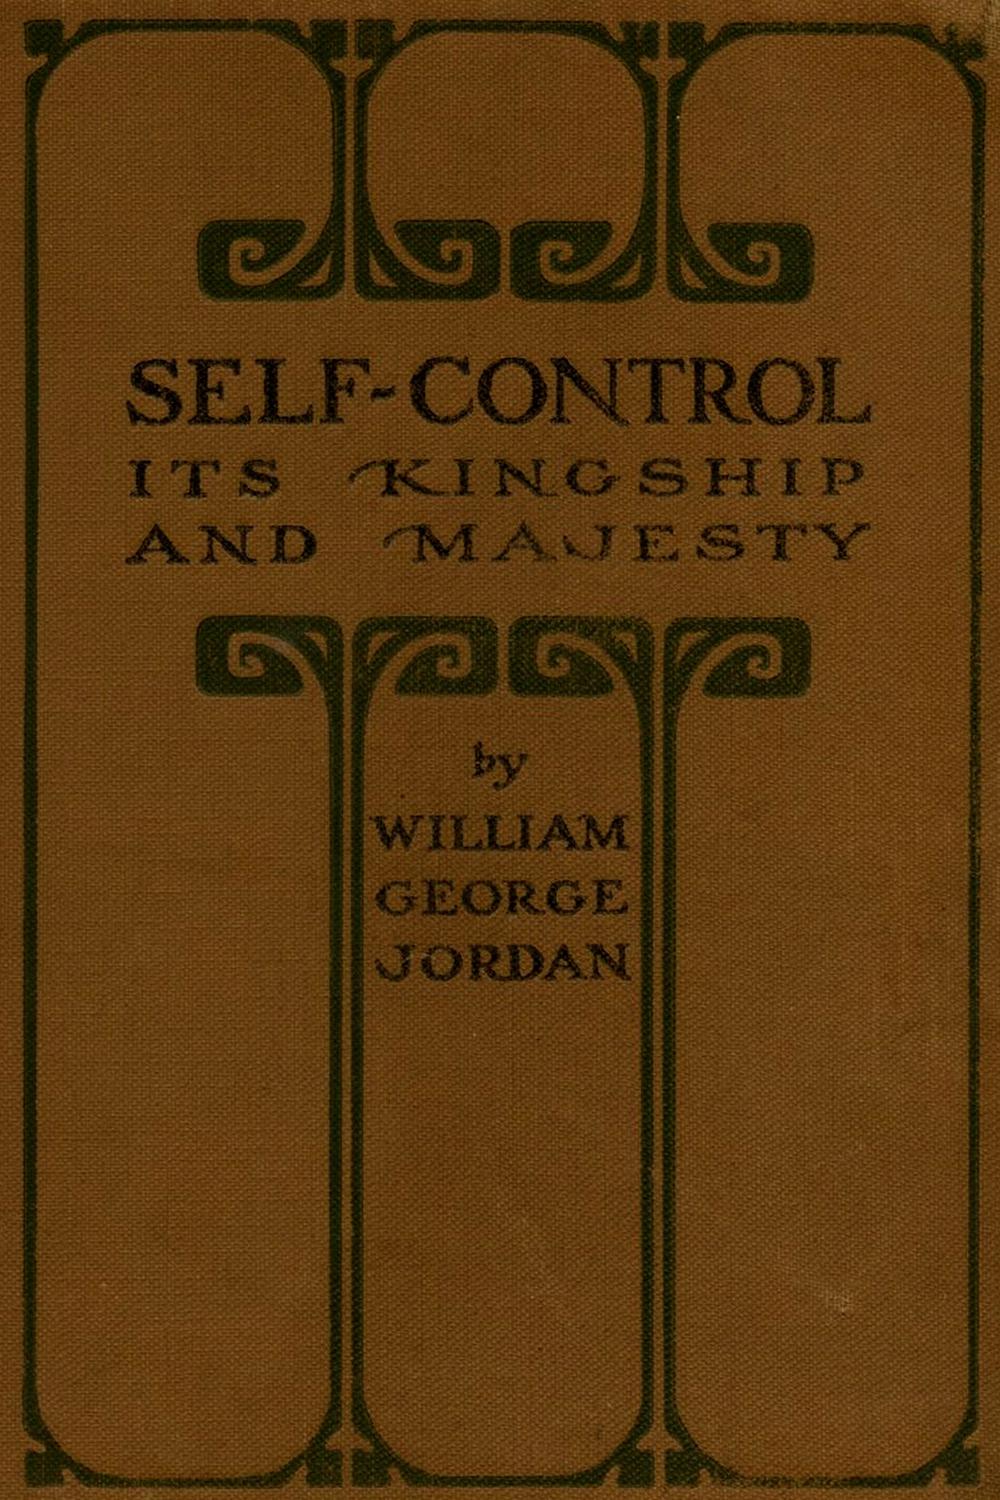 Self-Control: Its Kingship and Majesty - William George Jordan